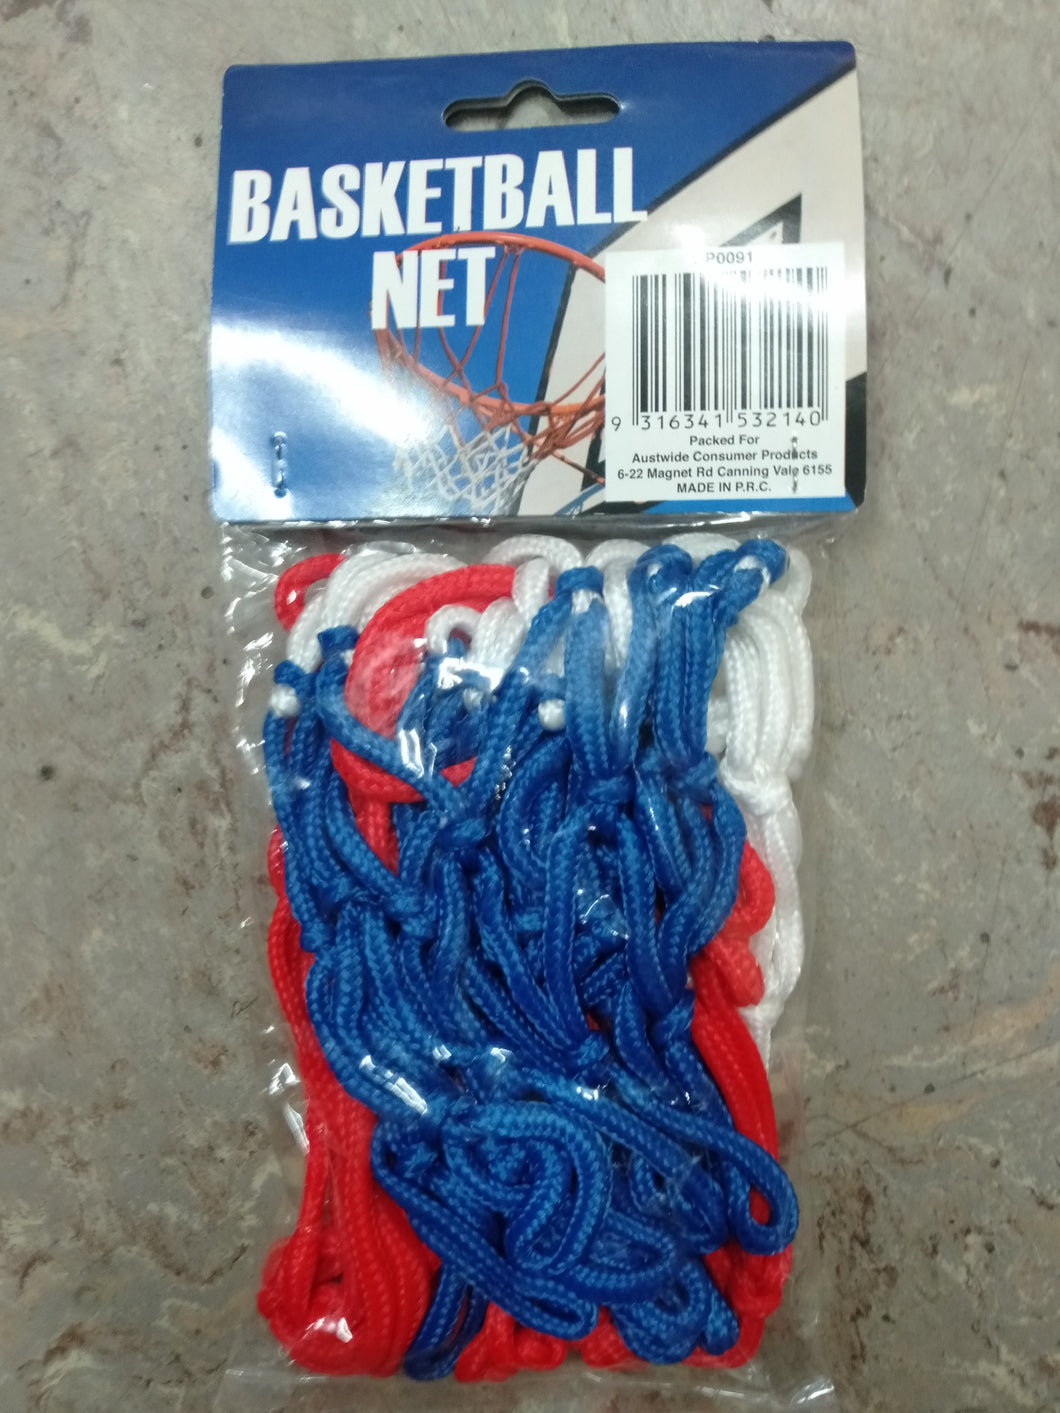 Basketball nets